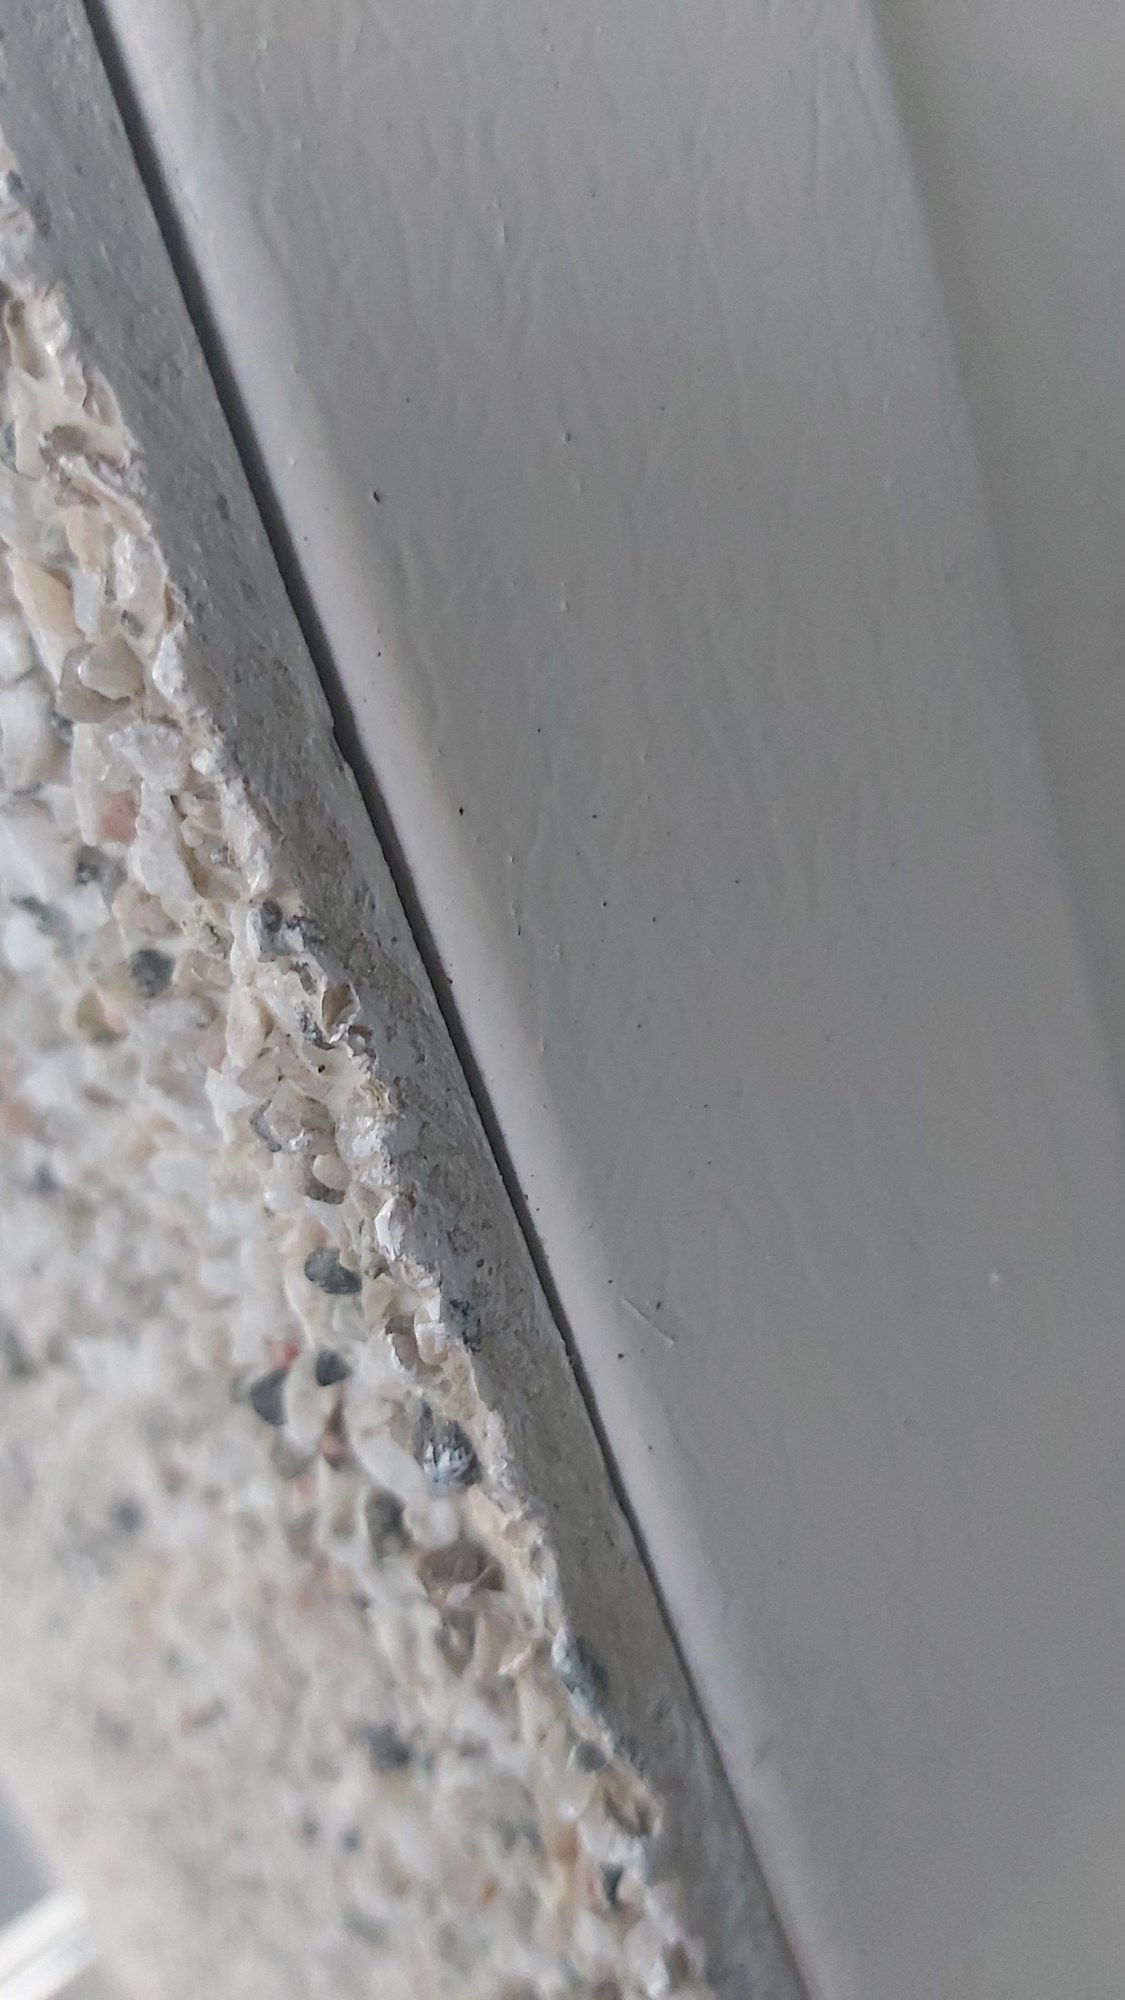 Mulig asbest i fasadeplater? - 20200709_225432.jpg - Ole-Marcus